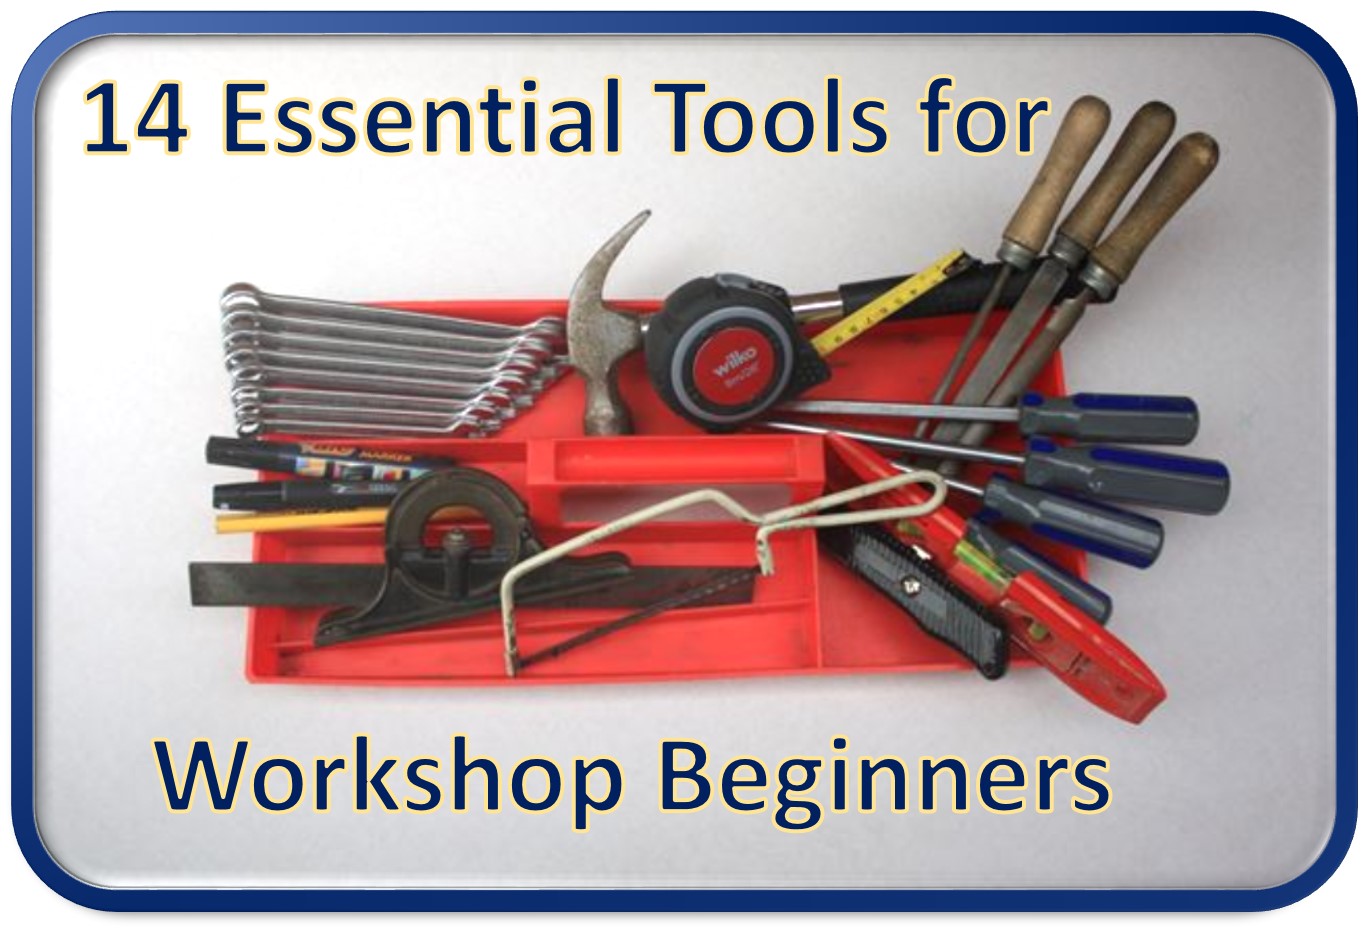 14 Essential Tools for Workshop Beginners